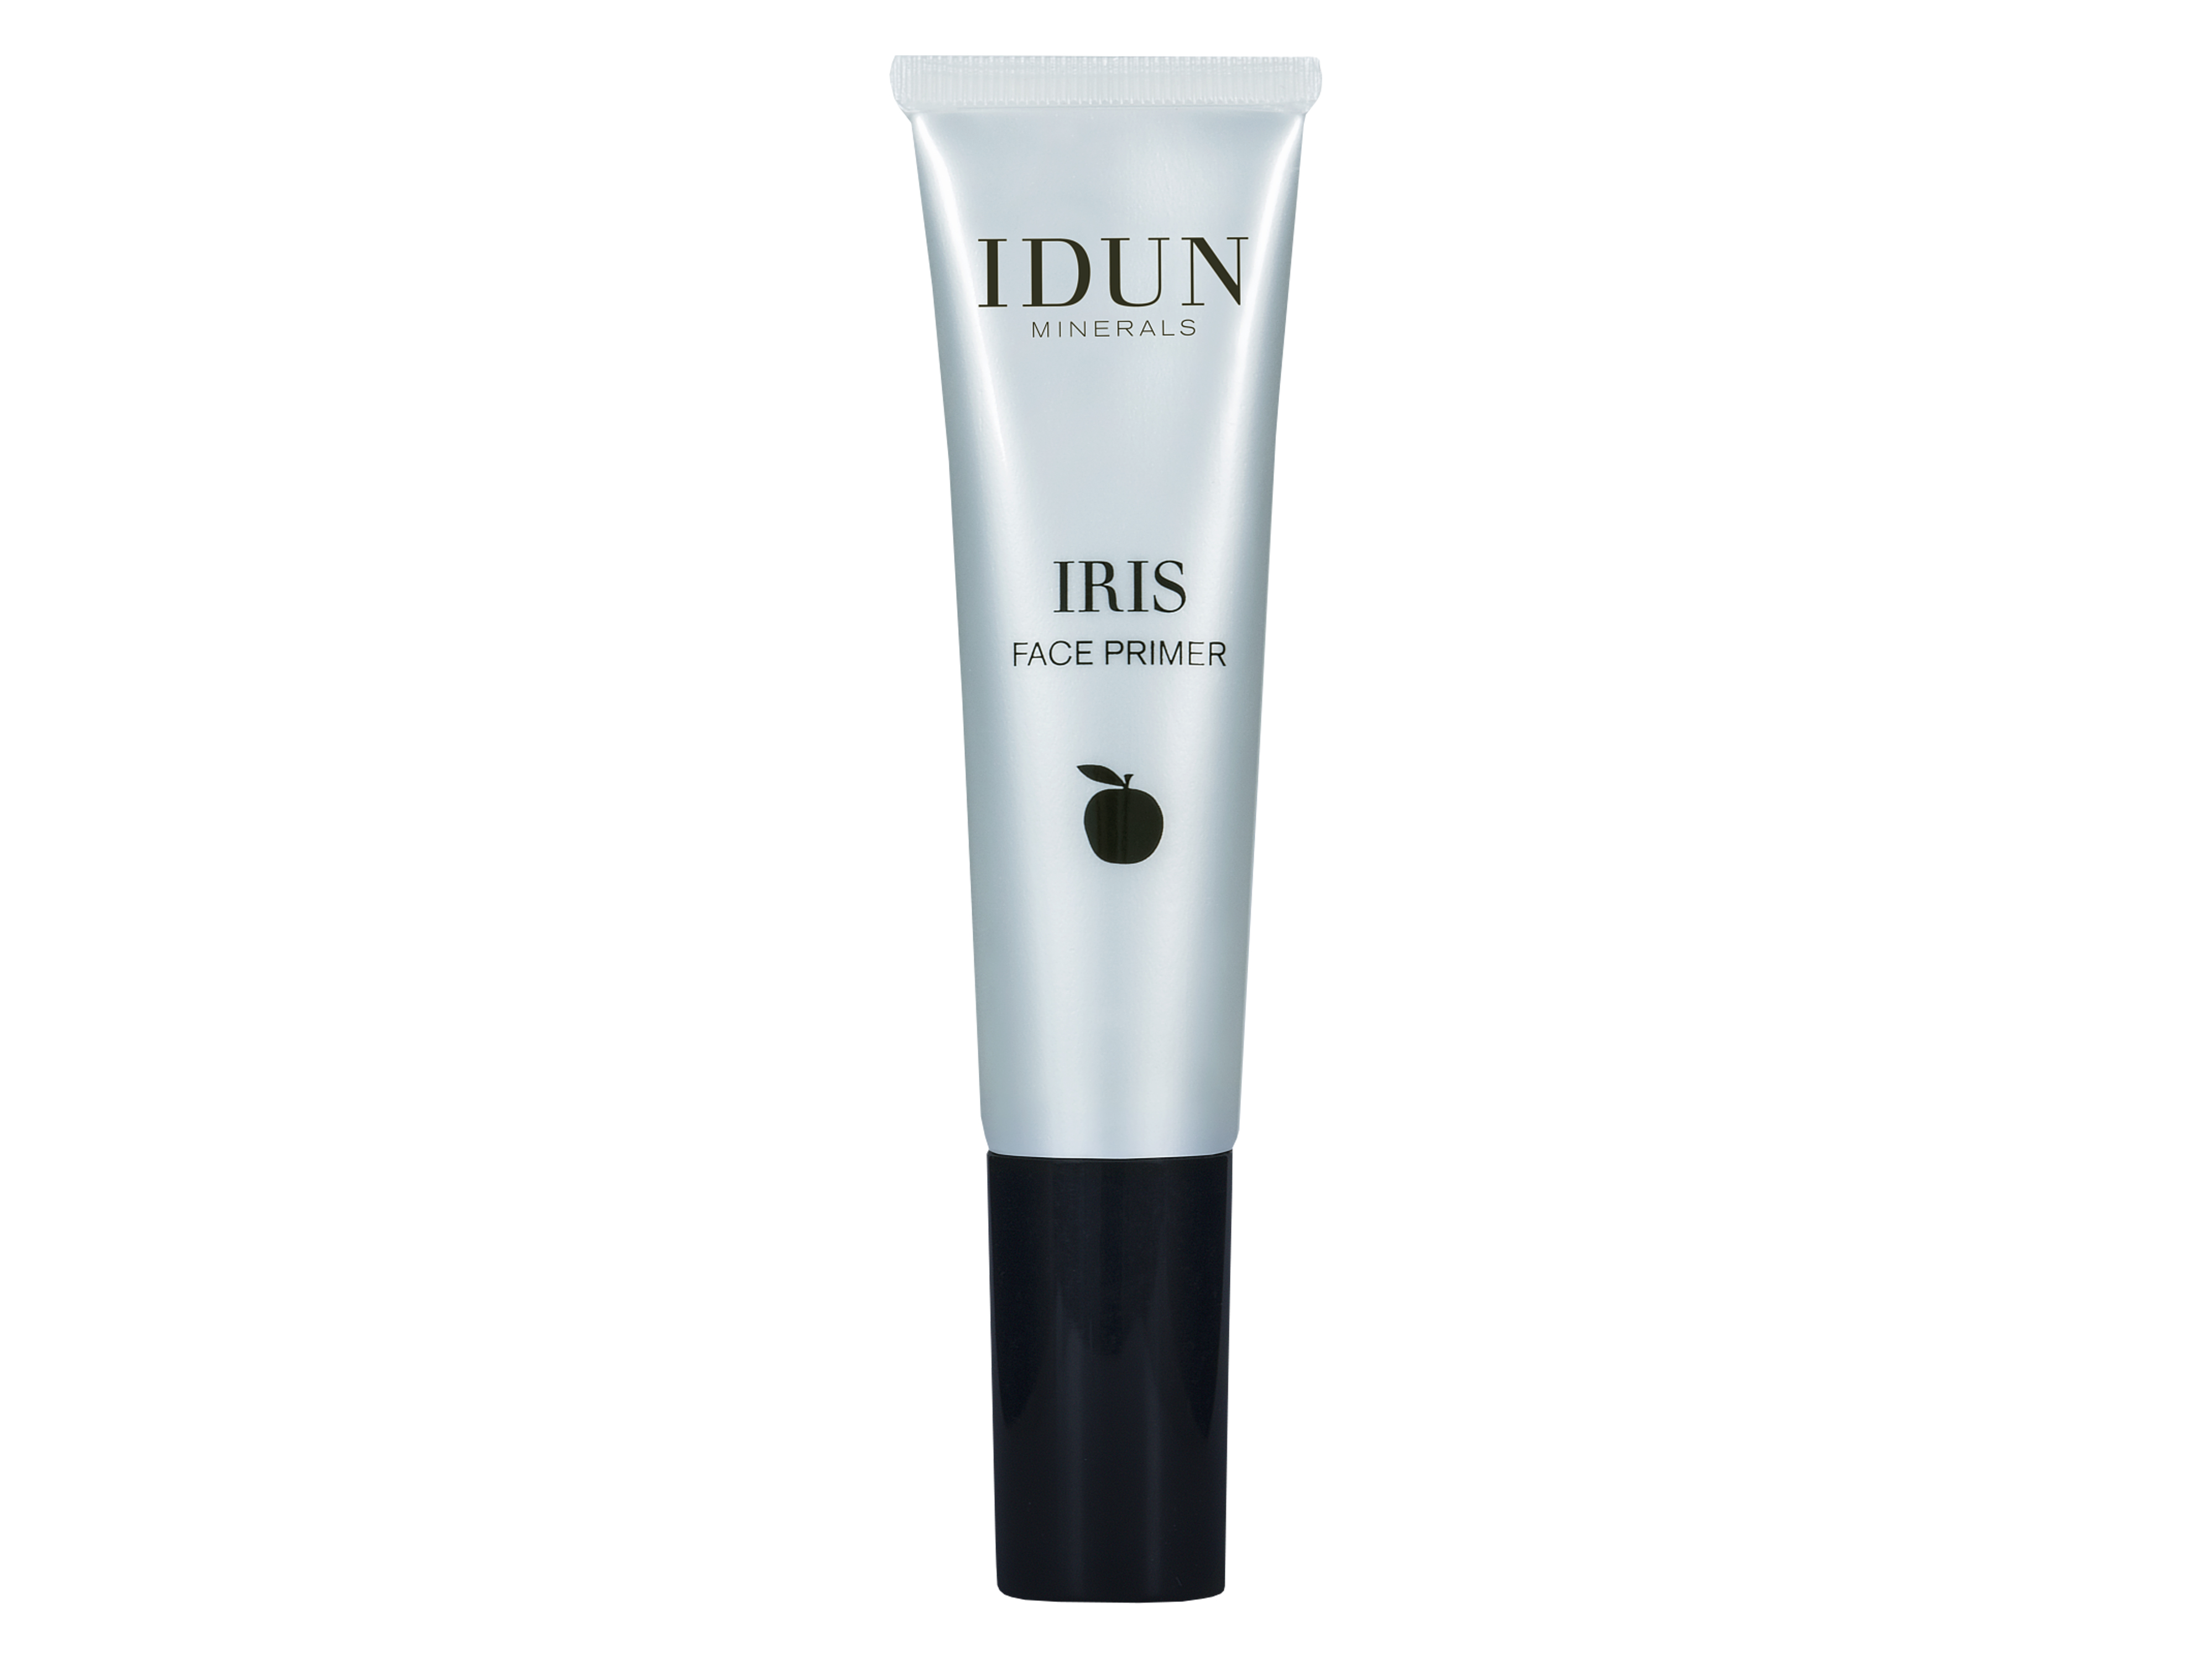 IDUN Minerals Face Primer Iris, 26 ml